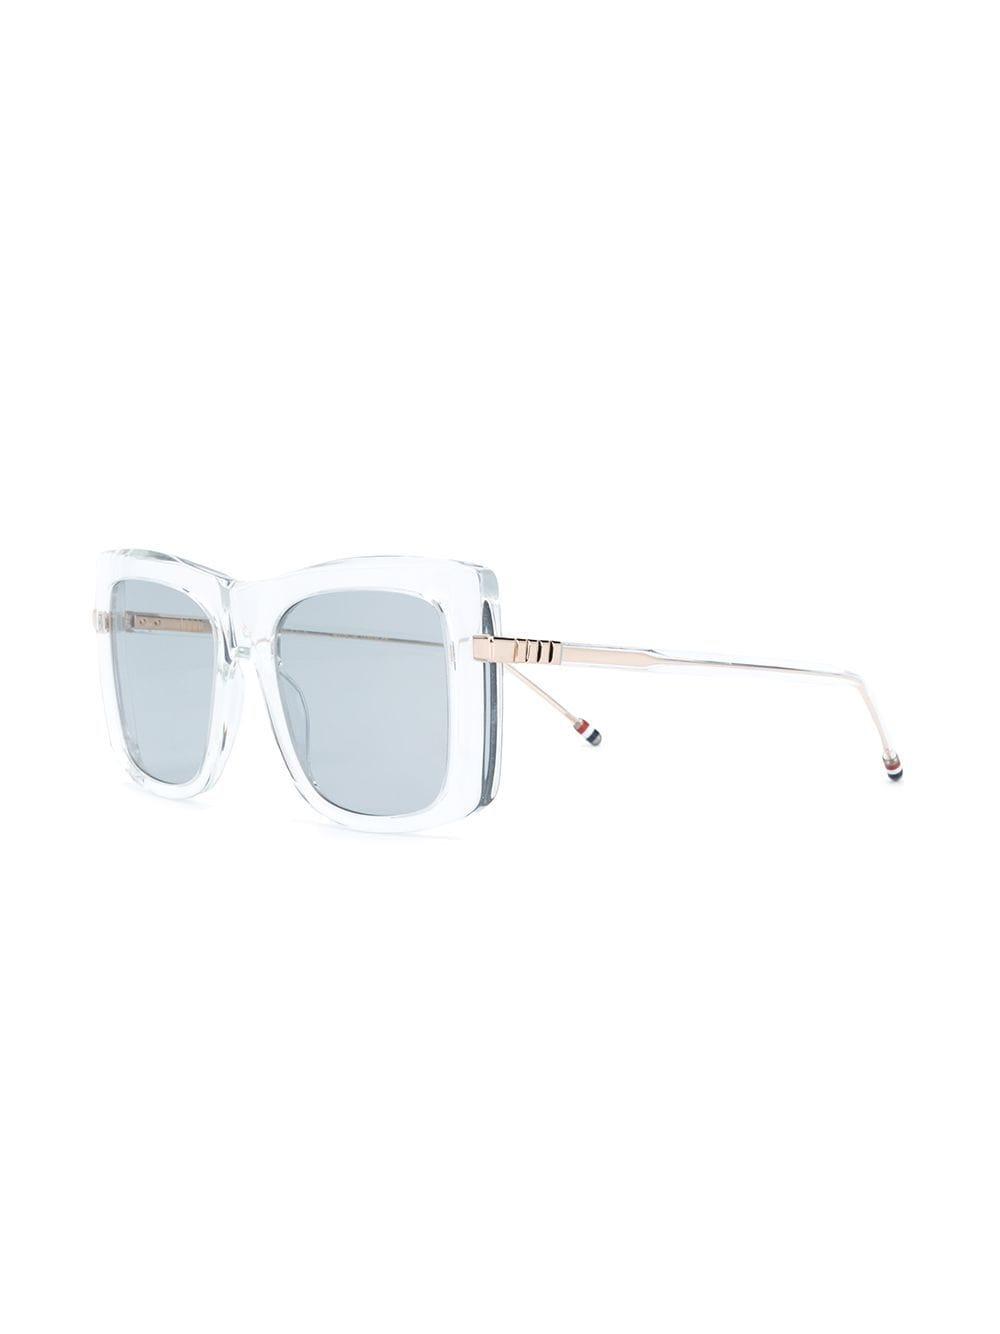 Thom Browne Square Frame Sunglasses | Lyst